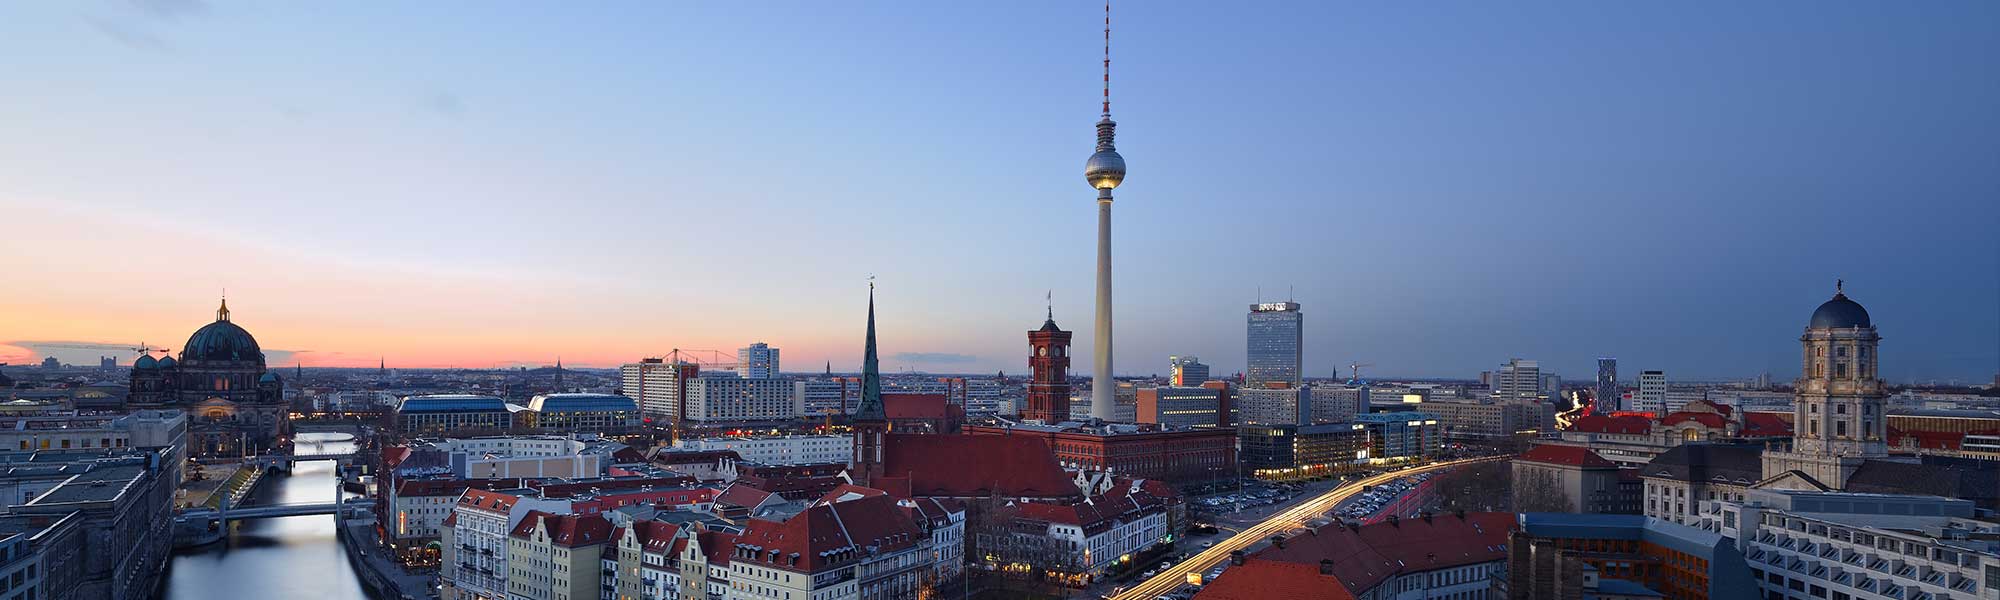 Germany - Berlin - Skyline - Alexander Platz & The Dome - Clean Sunset